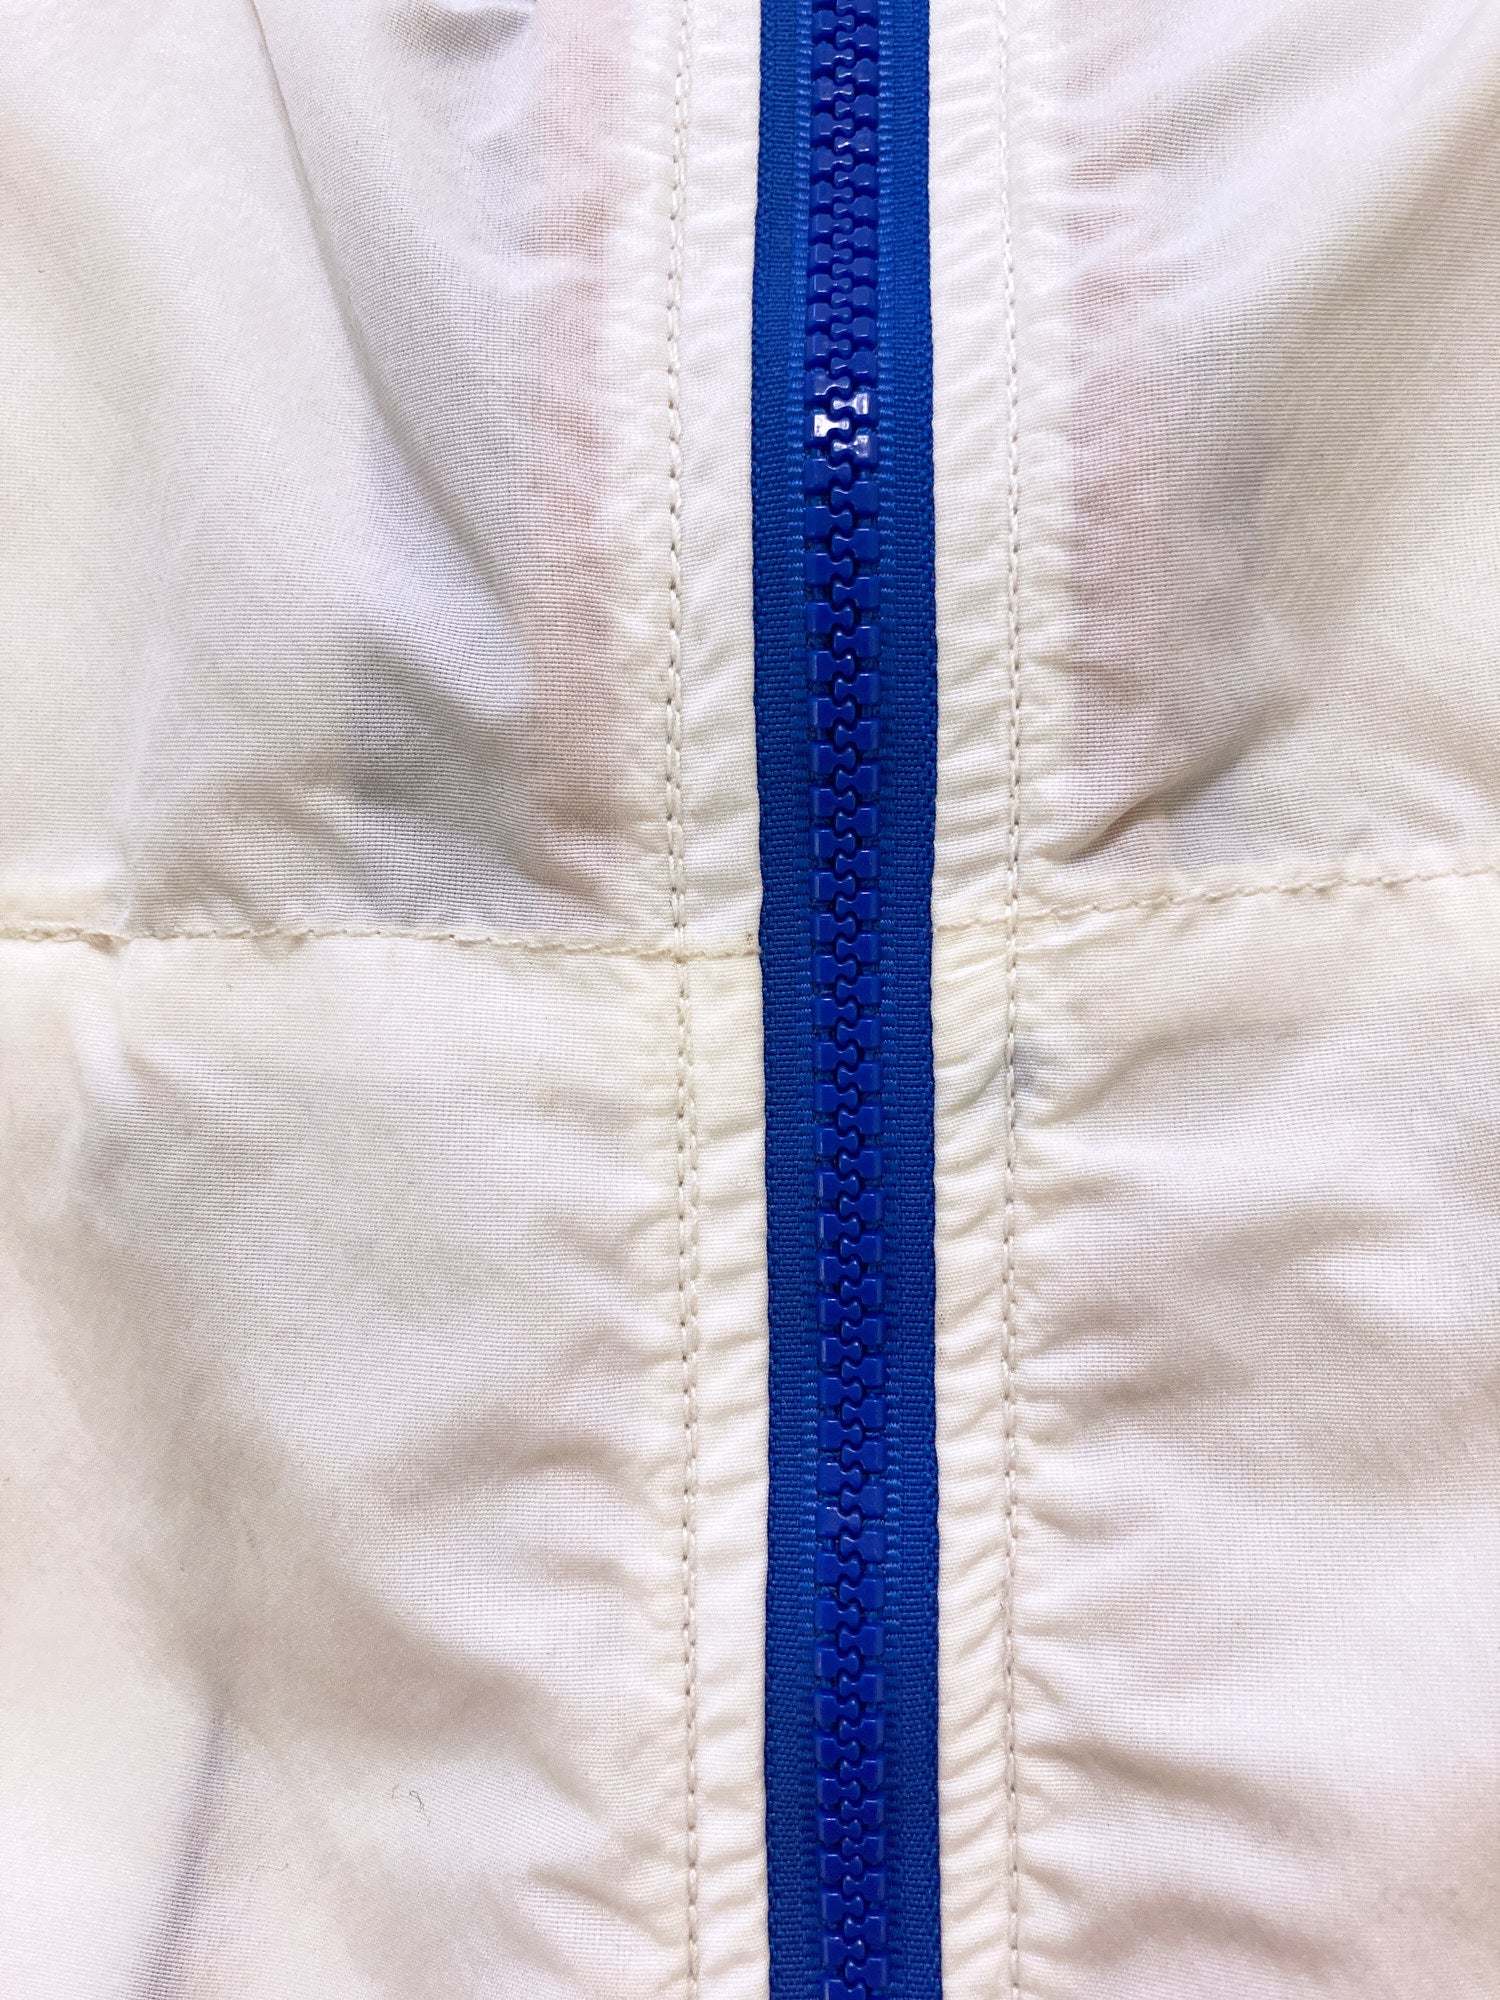 Sierra Designs 1990s white nylon 4 pocket parka with pullover hood - XL